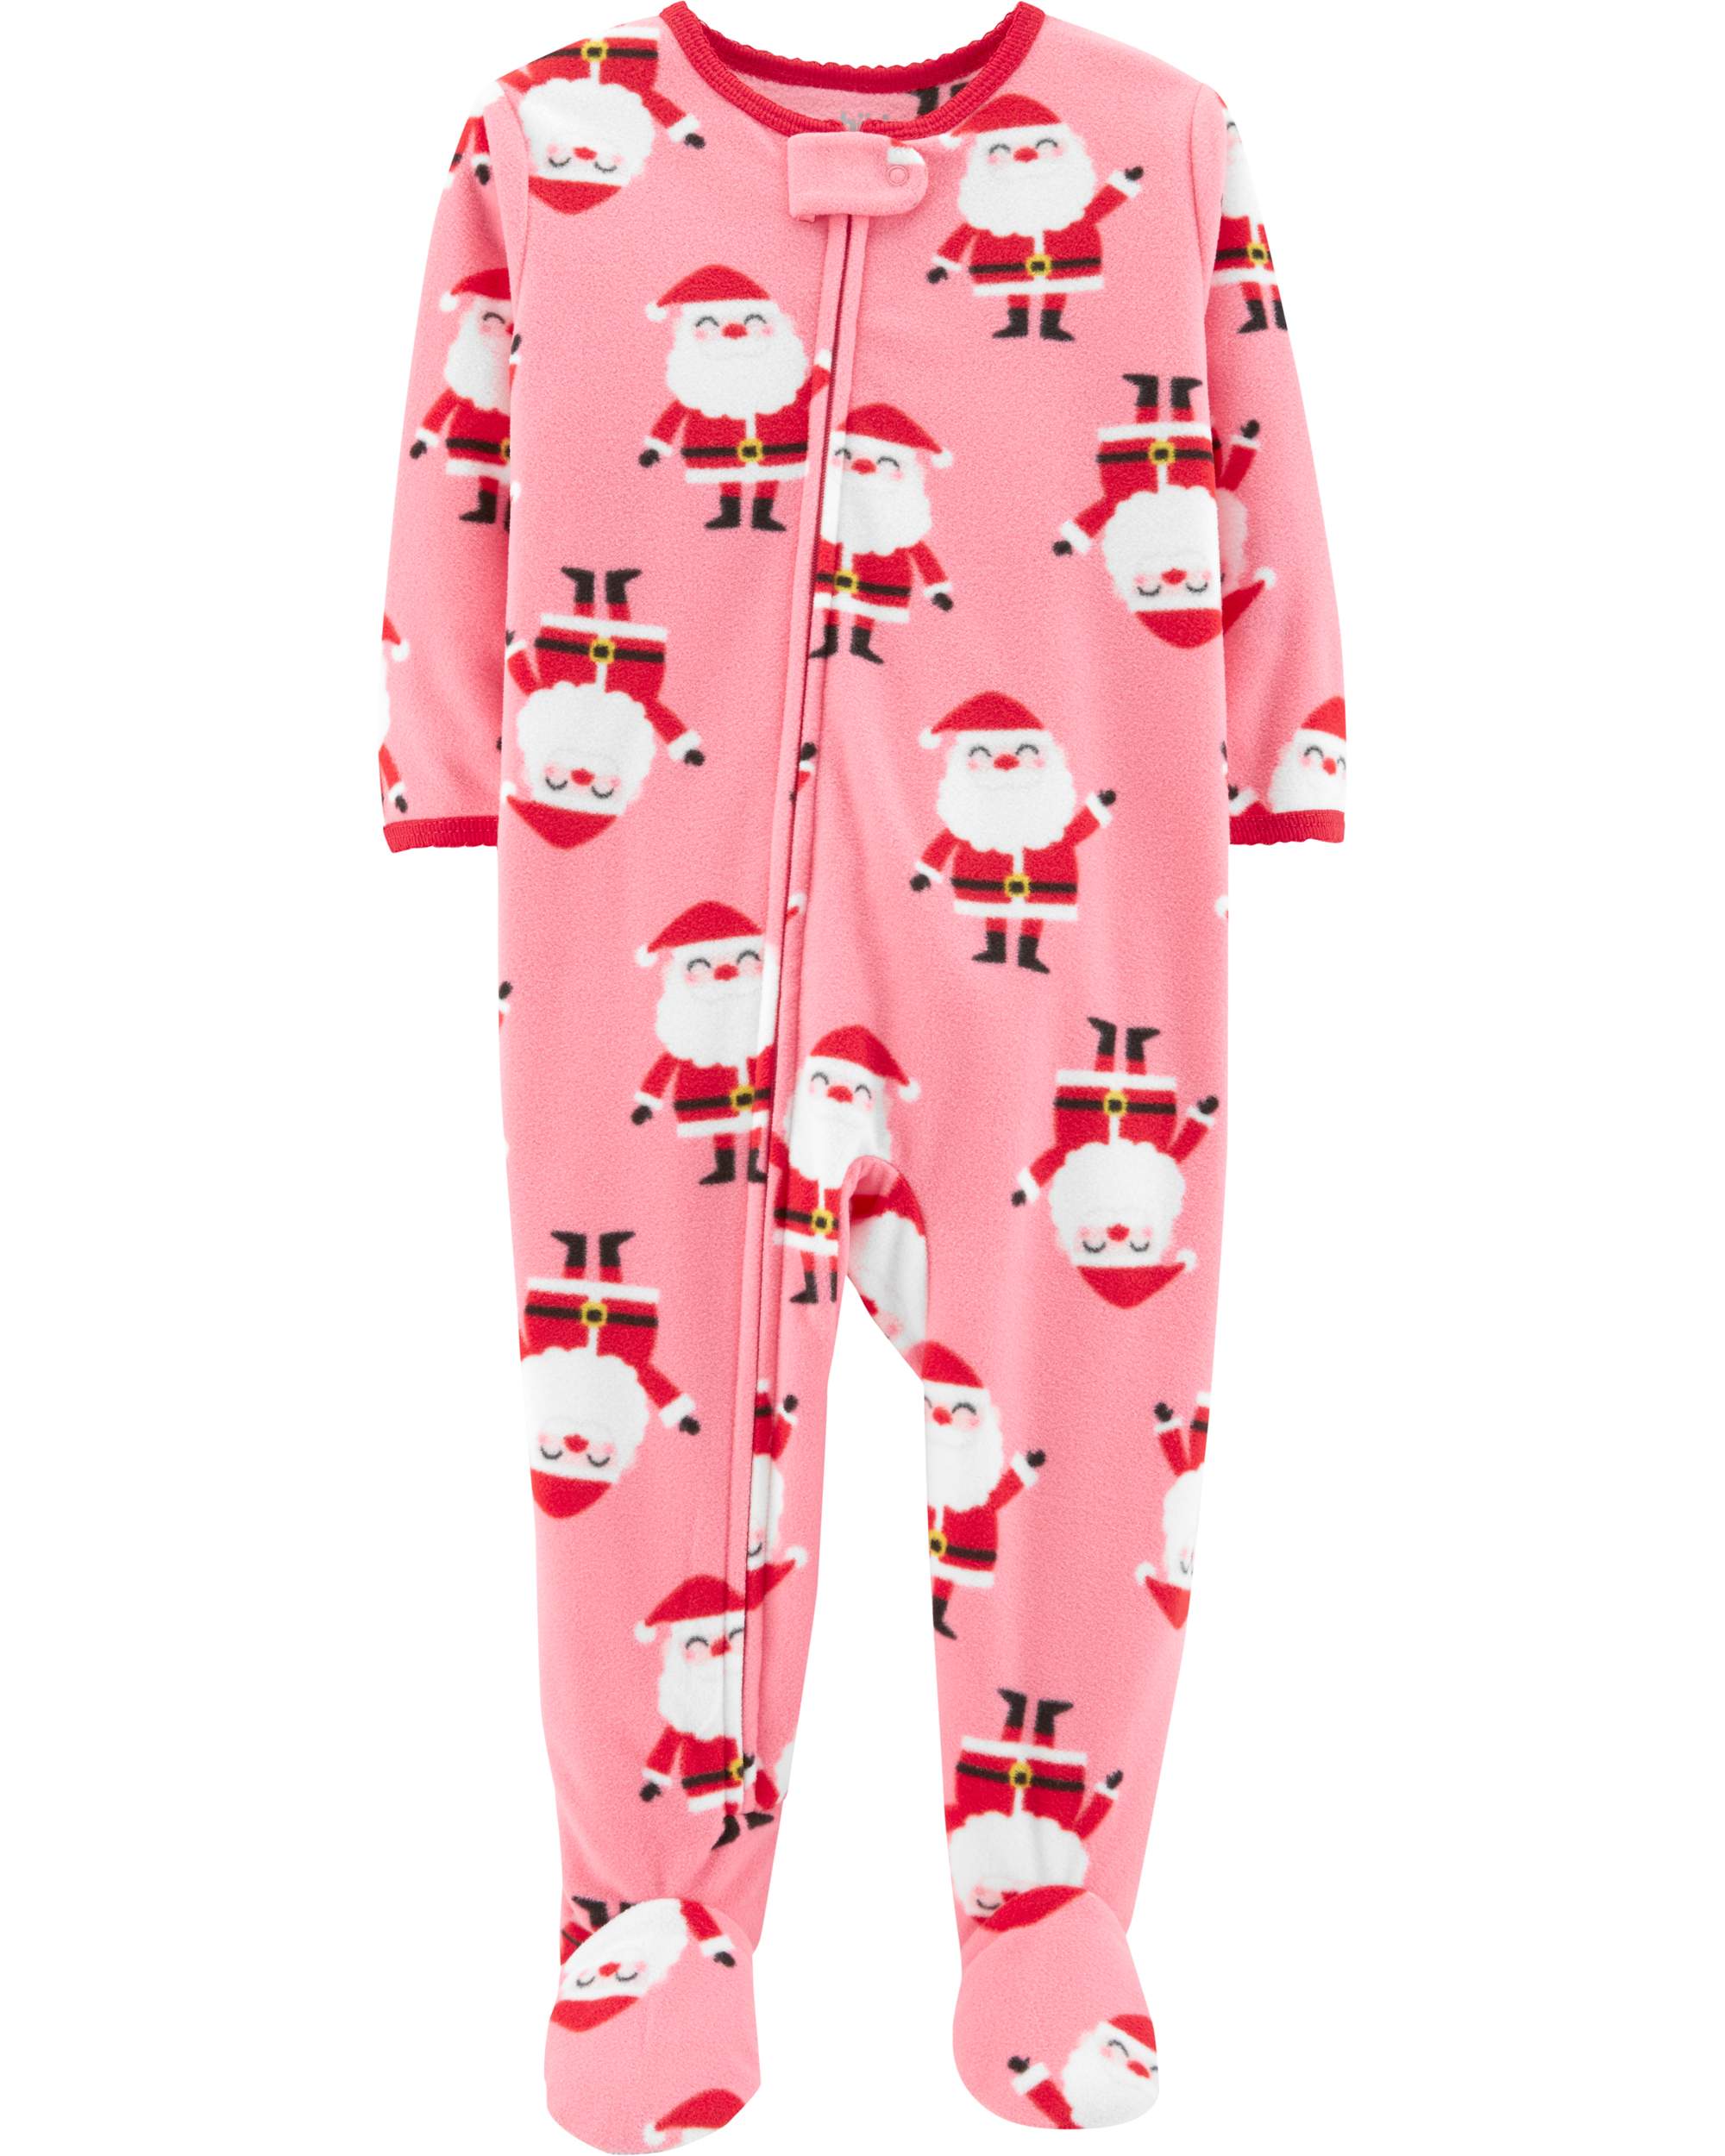 Carters Baby Girls Santa Blanket Sleeper Pajamas Baby Clothing